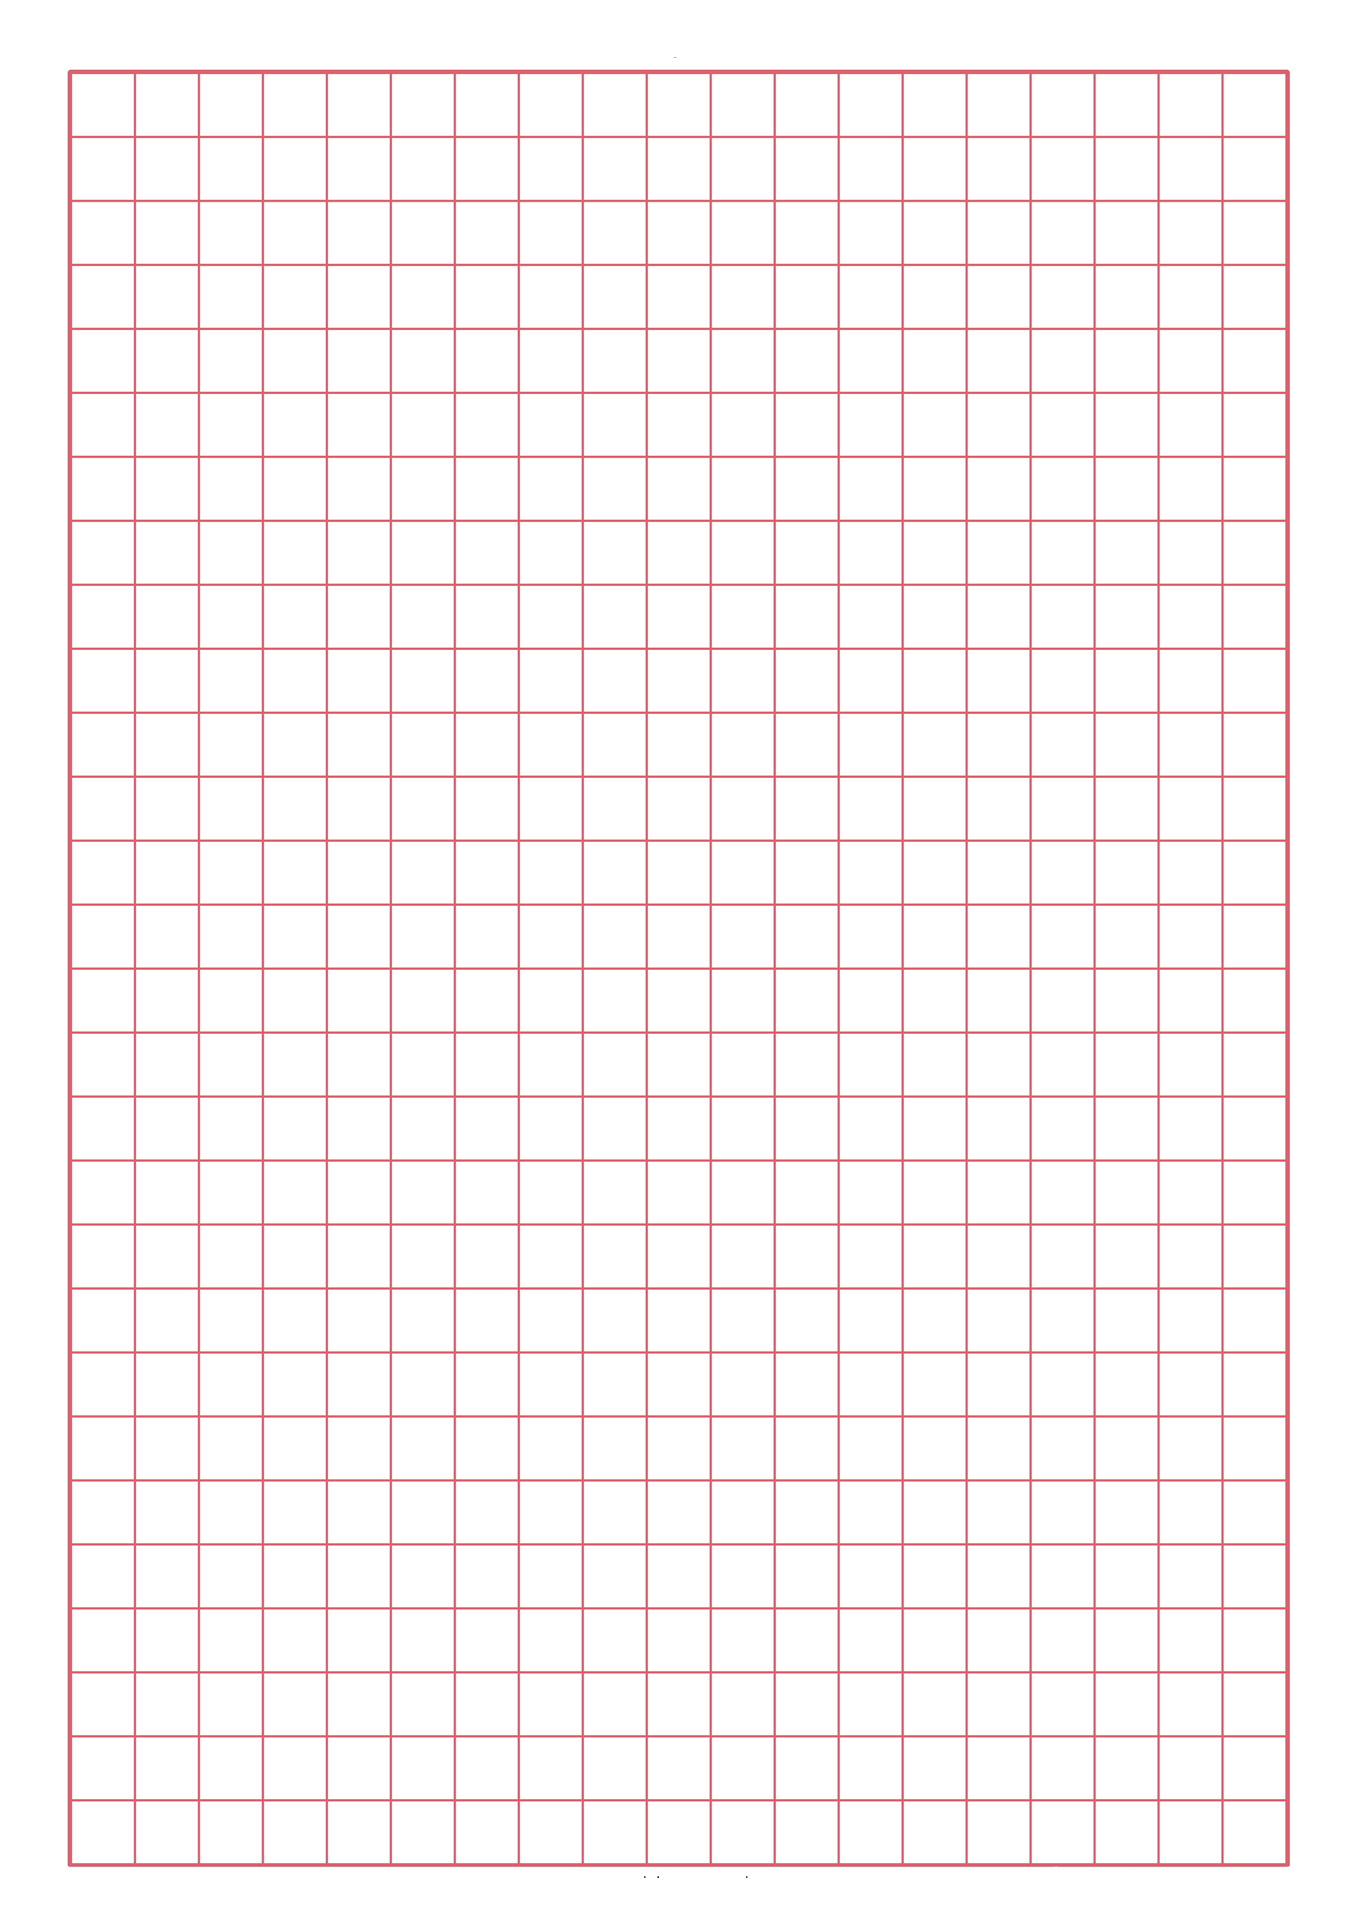 13 Best Images of Coordinate Grid Art Worksheets - Blank Coordinate